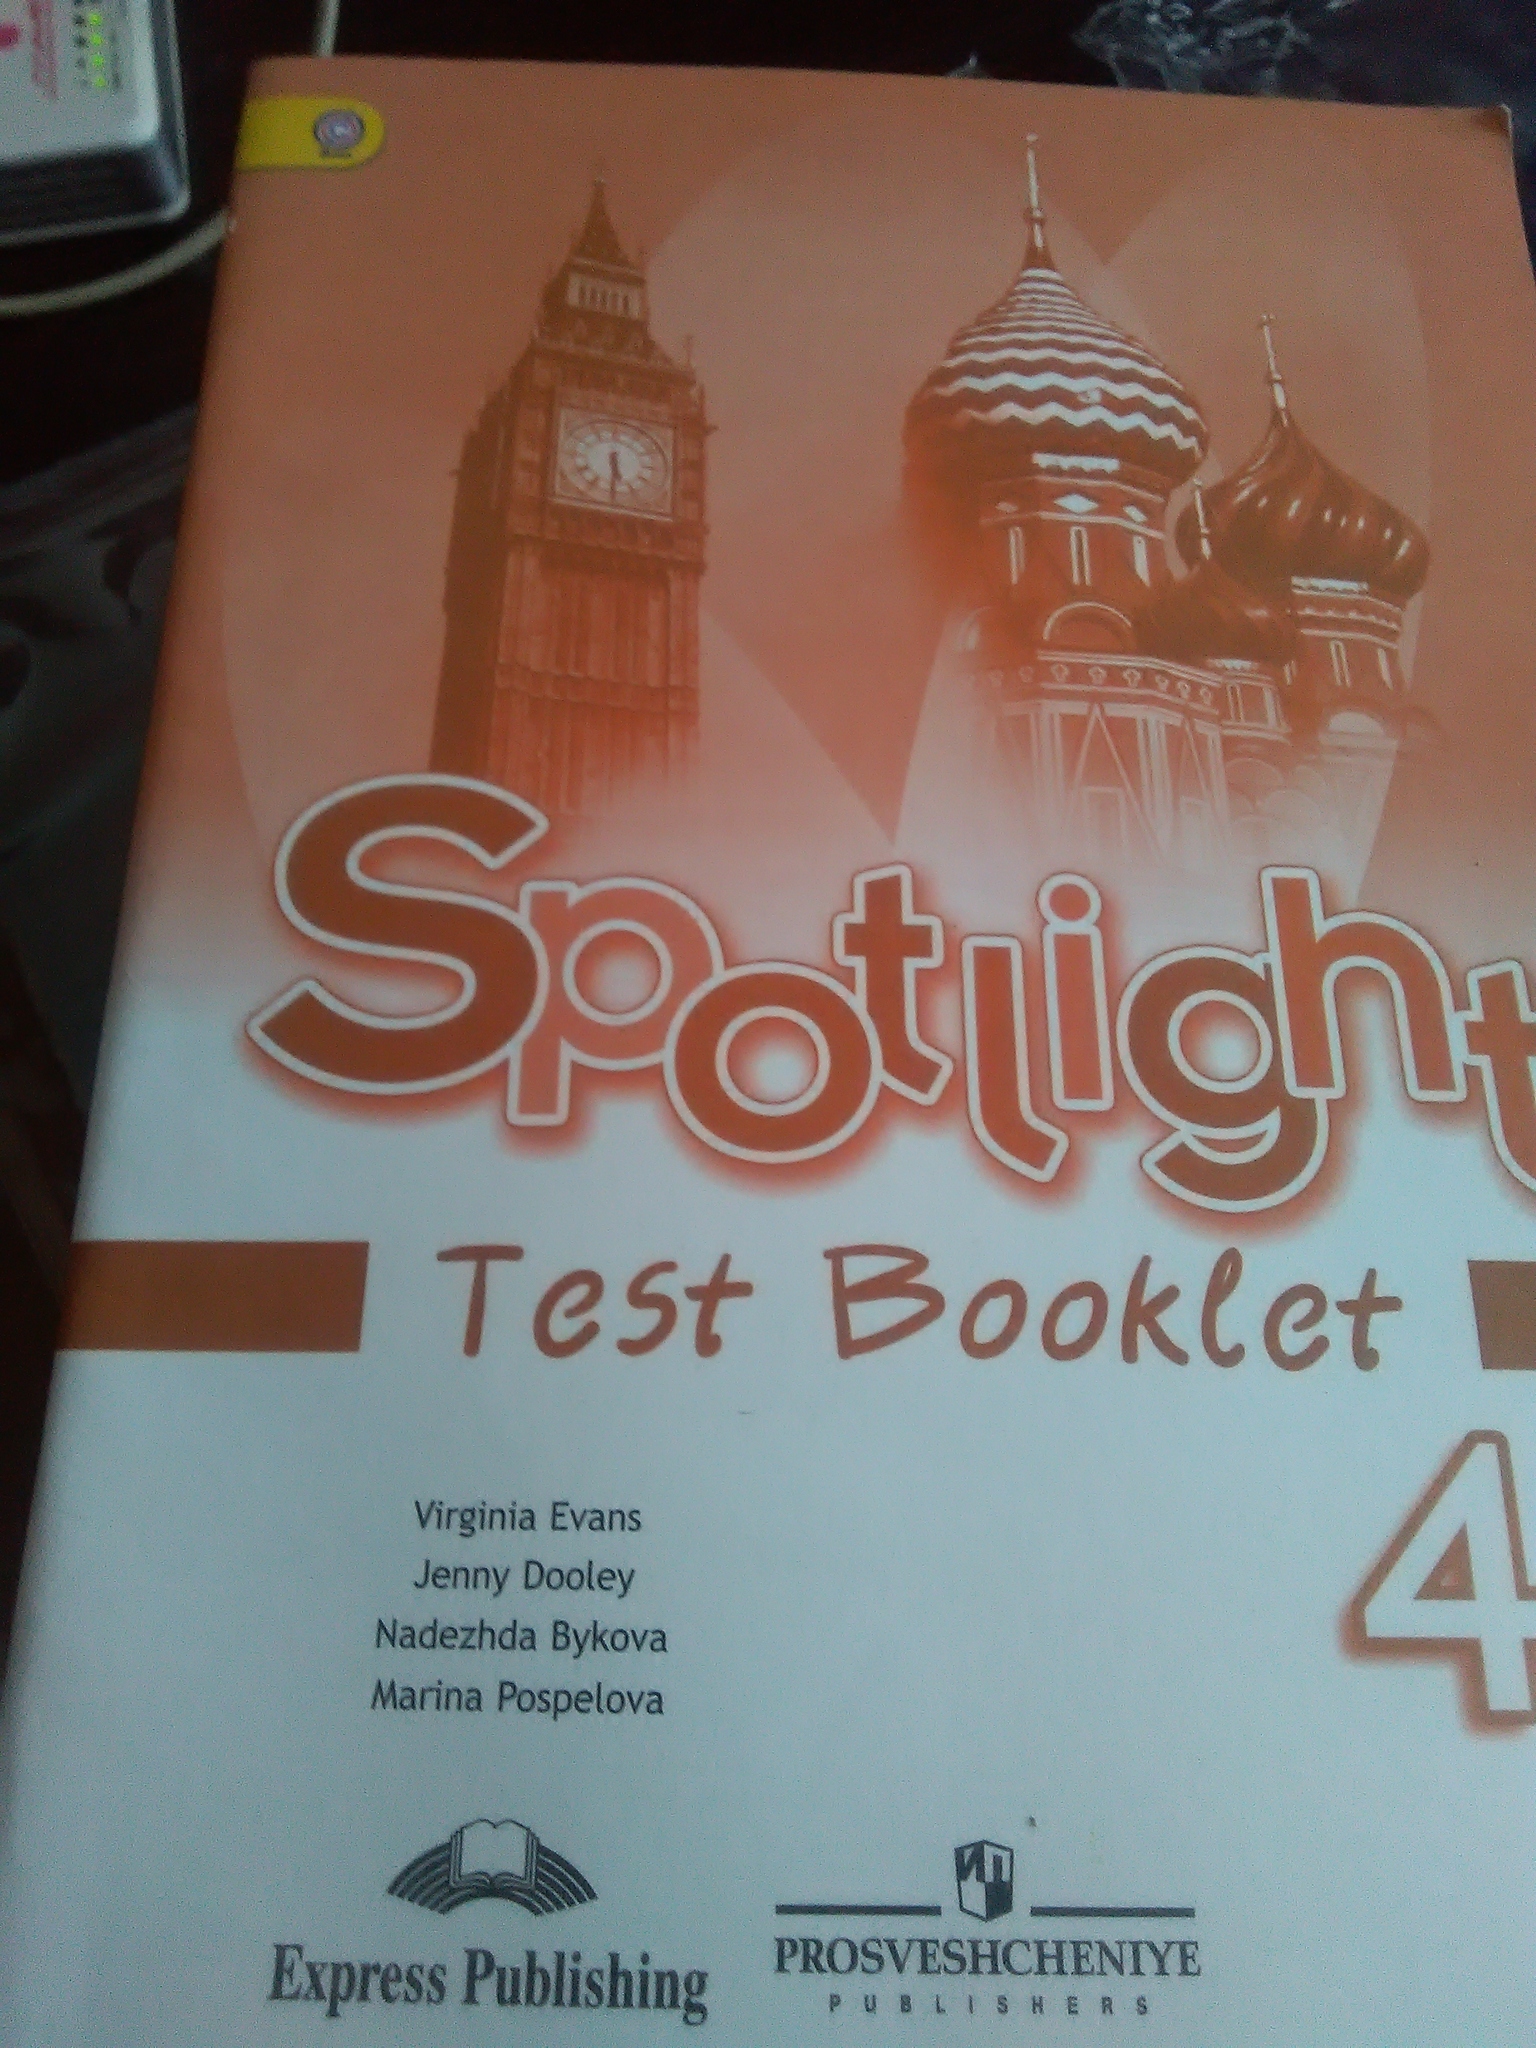 Тест бук по английскому языку 7 класс. Спотлайт 4 класс тест буклет. Test booklet 4 класс Spotlight. Spotlight 4 Test booklet английский. Спотлайт 4 Test booklet.